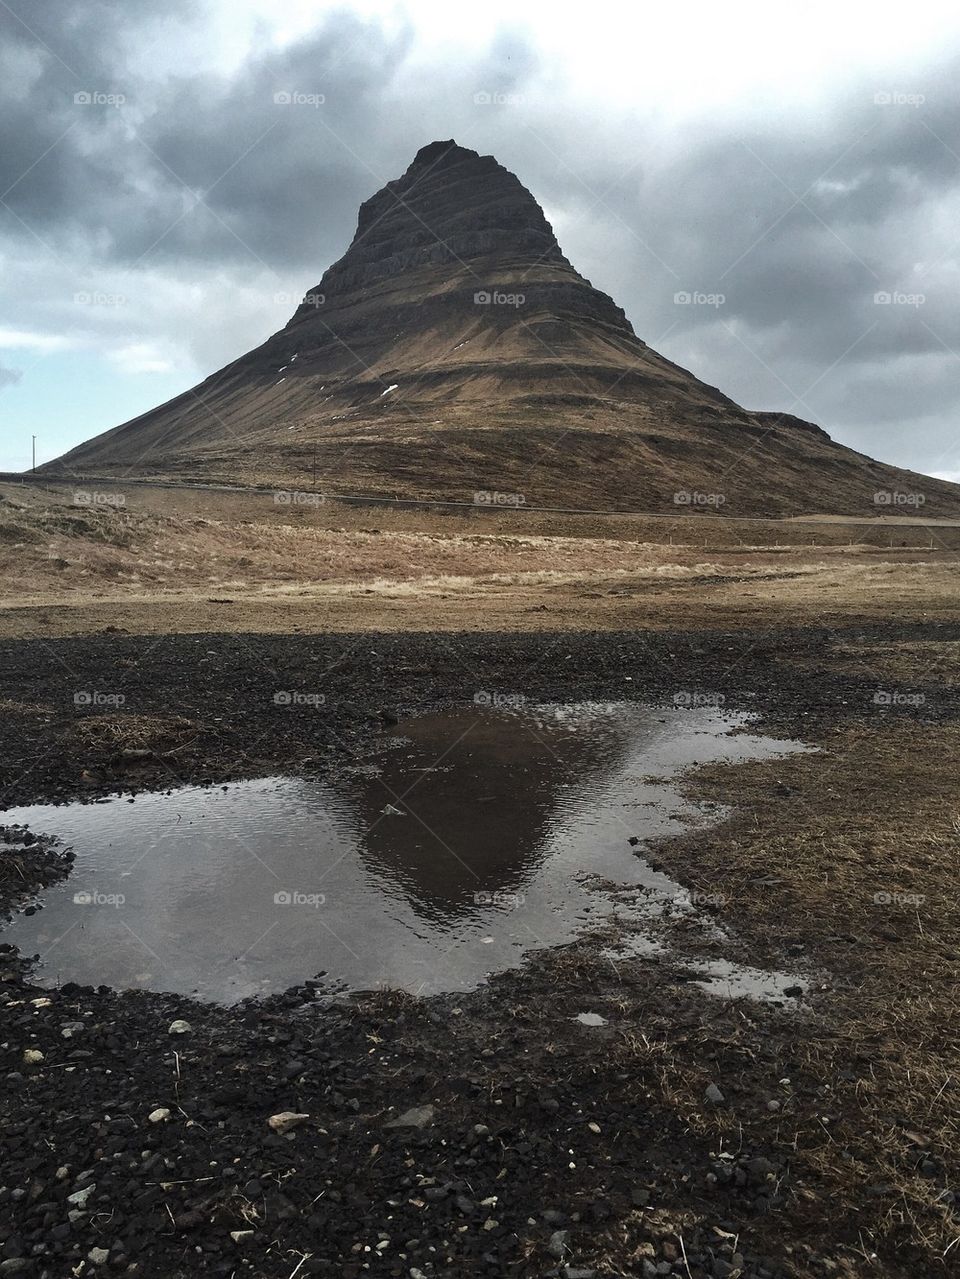 Kirkjufell mountain, Iceland